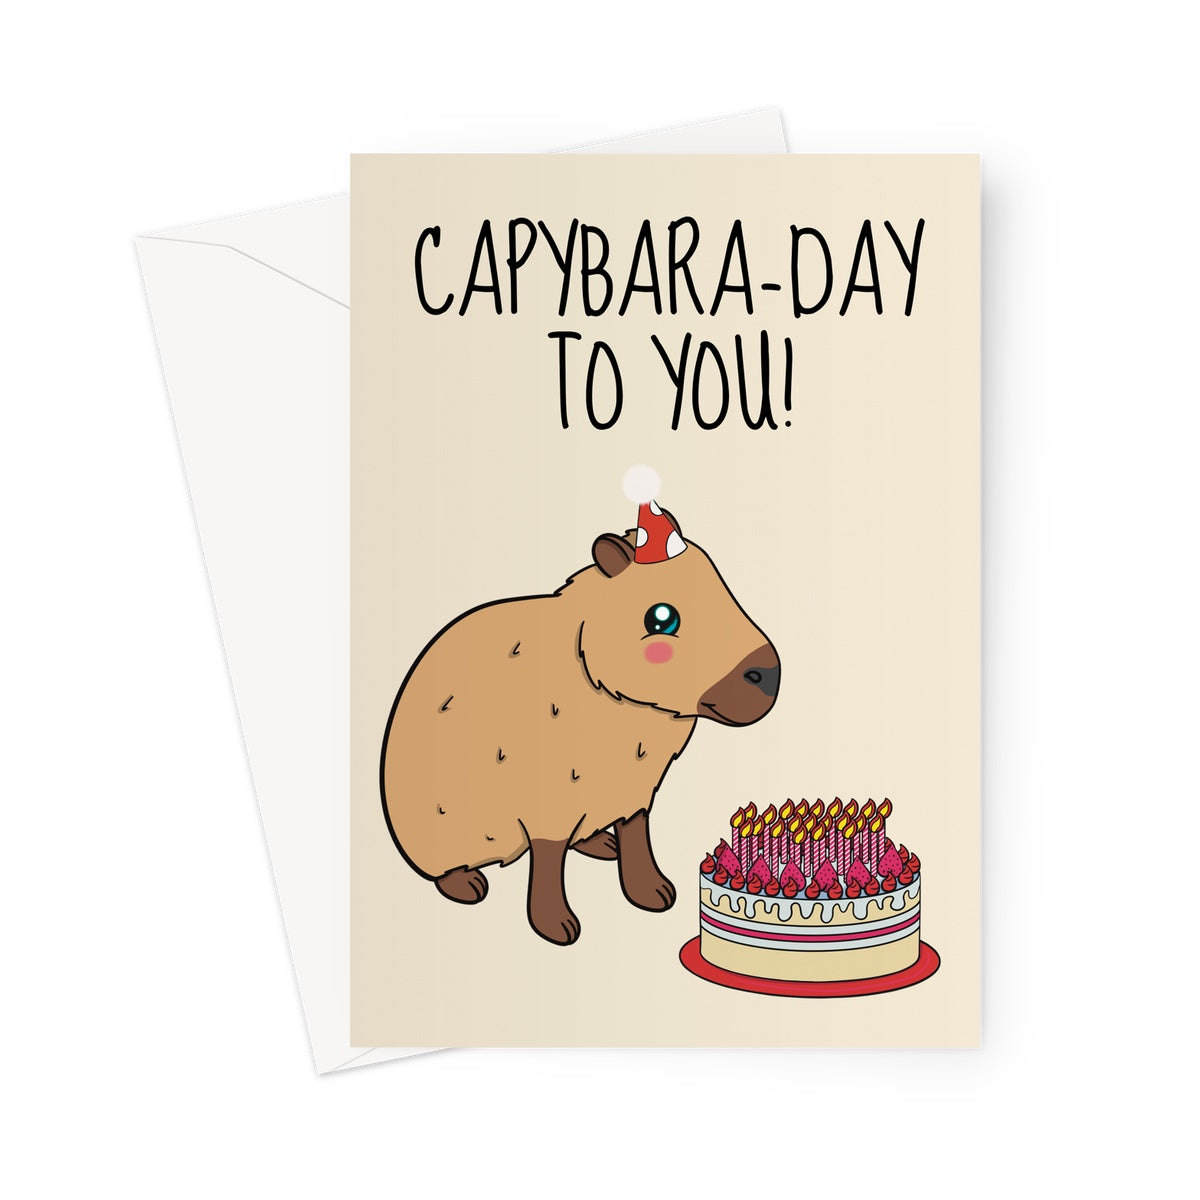 A cute Capybara birthday card which reads "Capybara-day to you!"